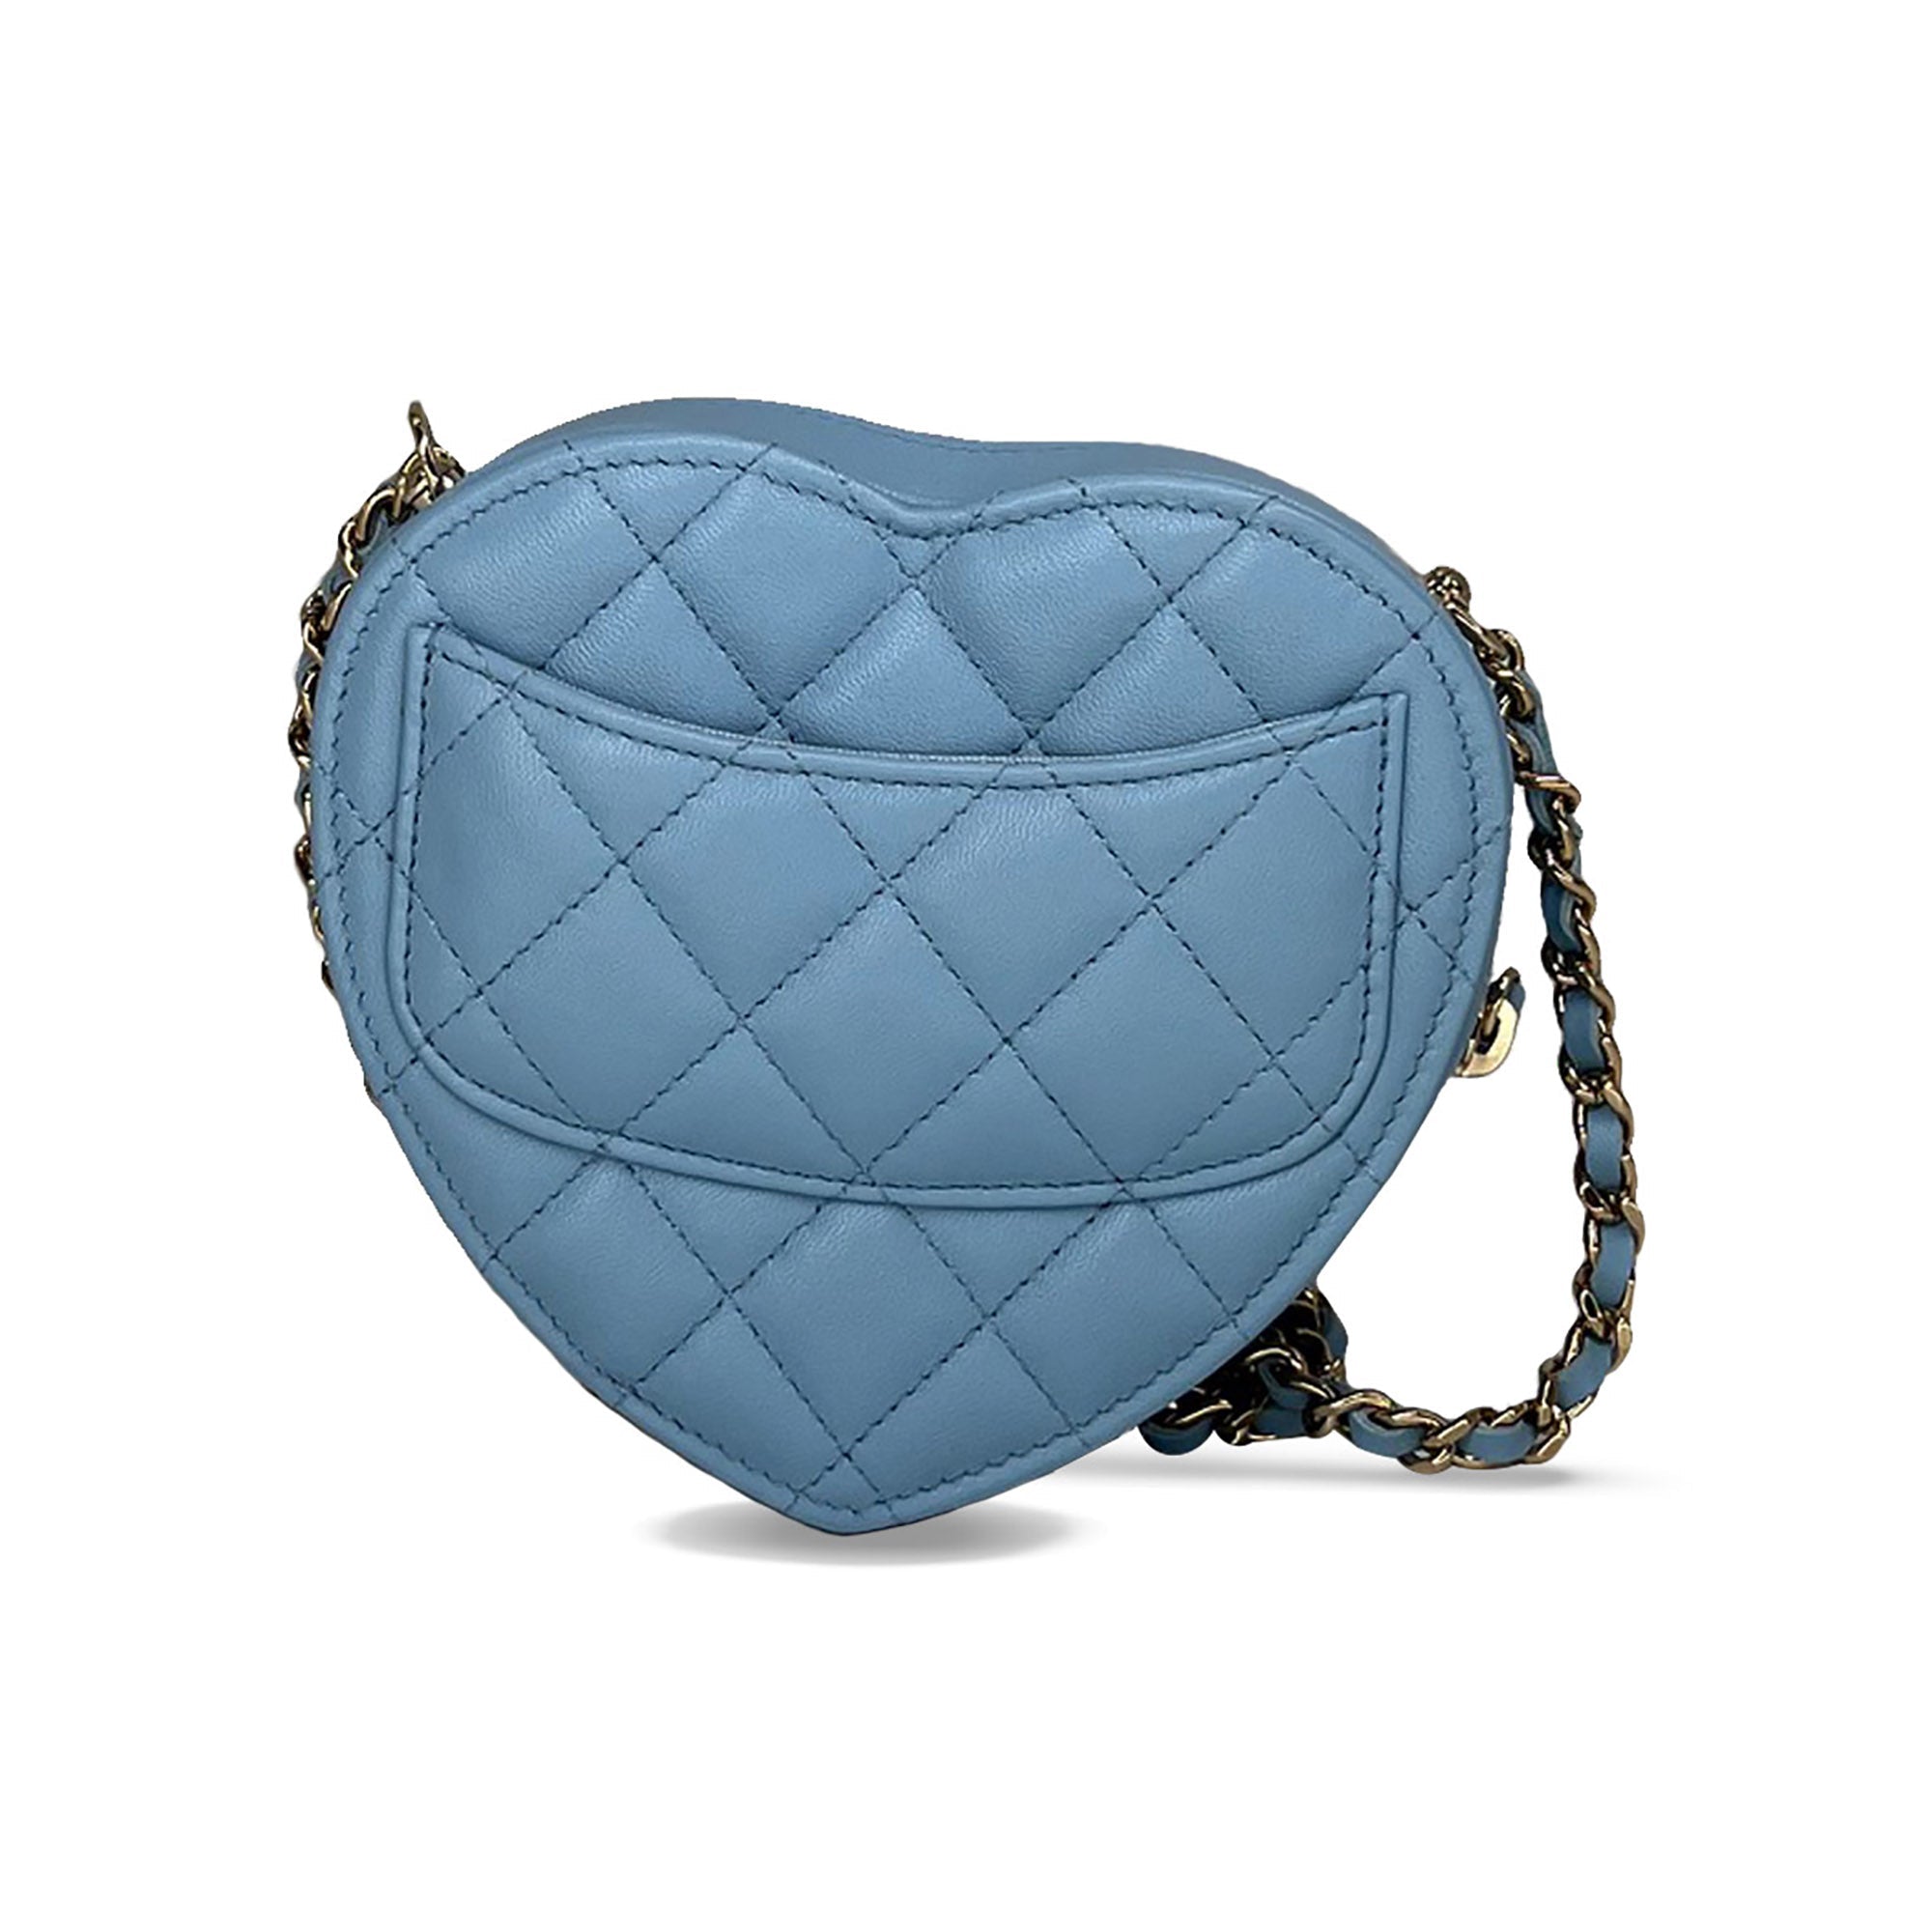 Chanel leather Medium heart bag